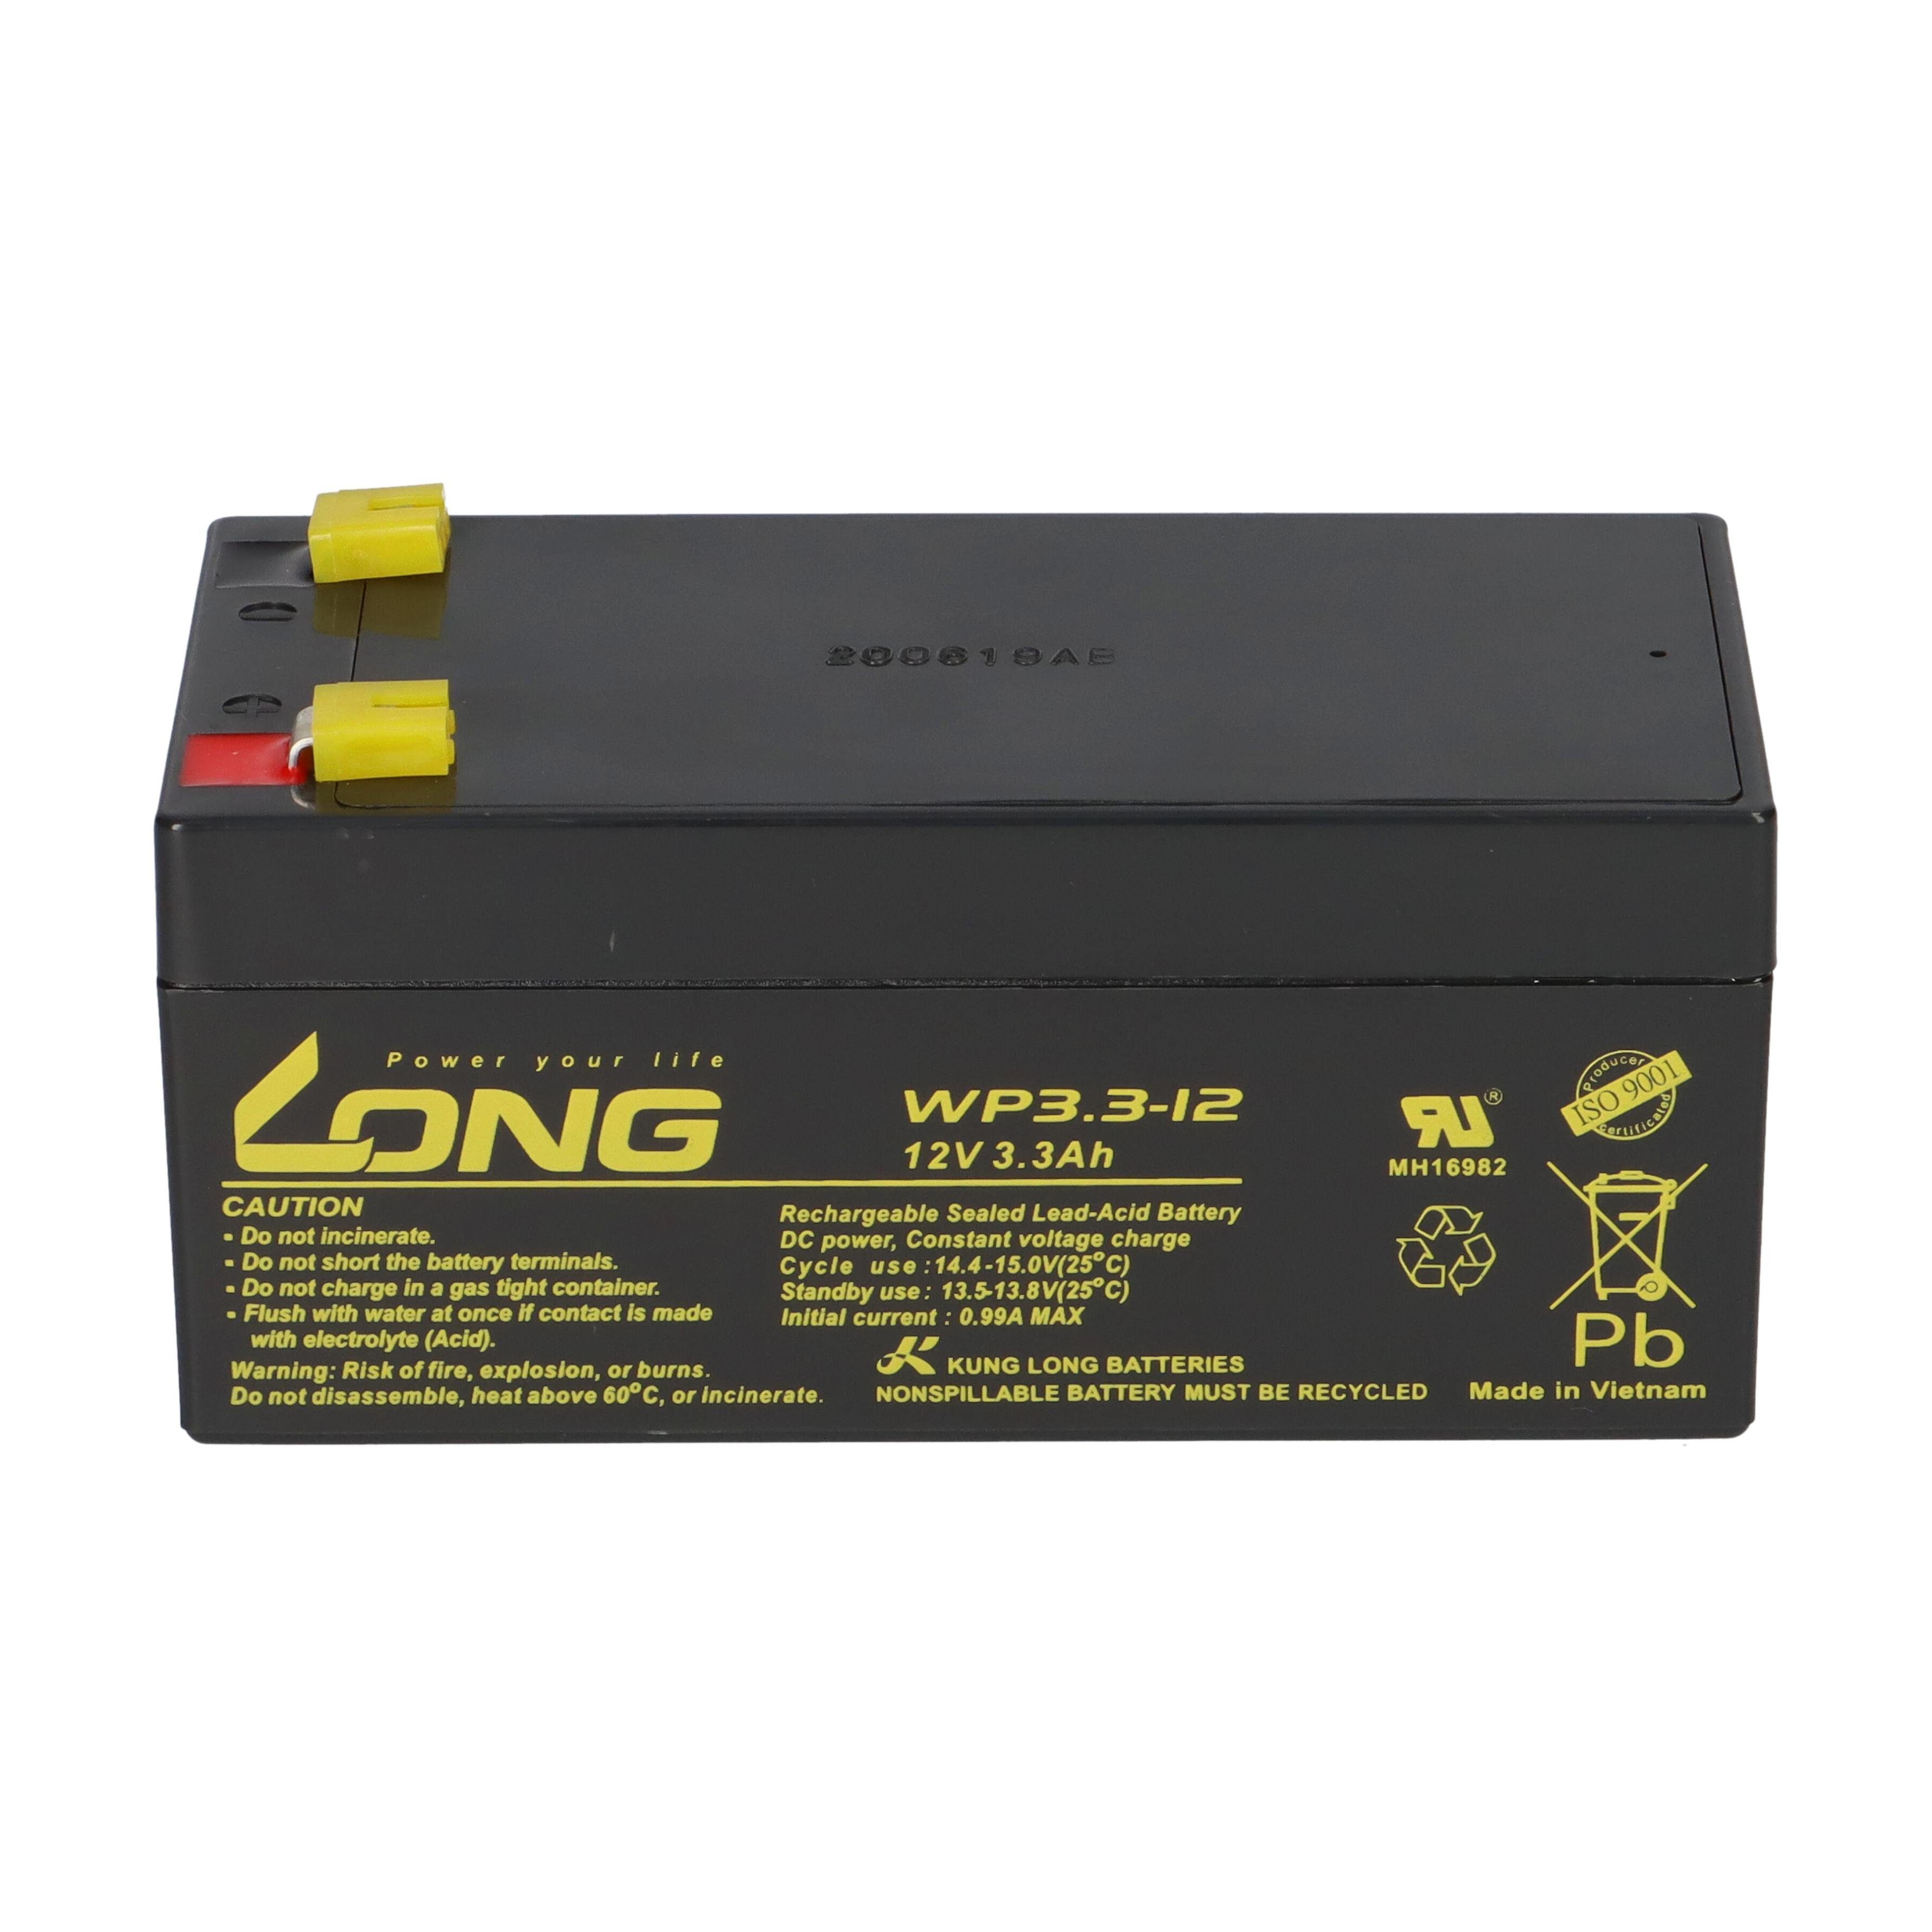 Kung Long Bleiakku battery Bleiakkus EBC12-3.2 kompatibel 12V 3,3Ah